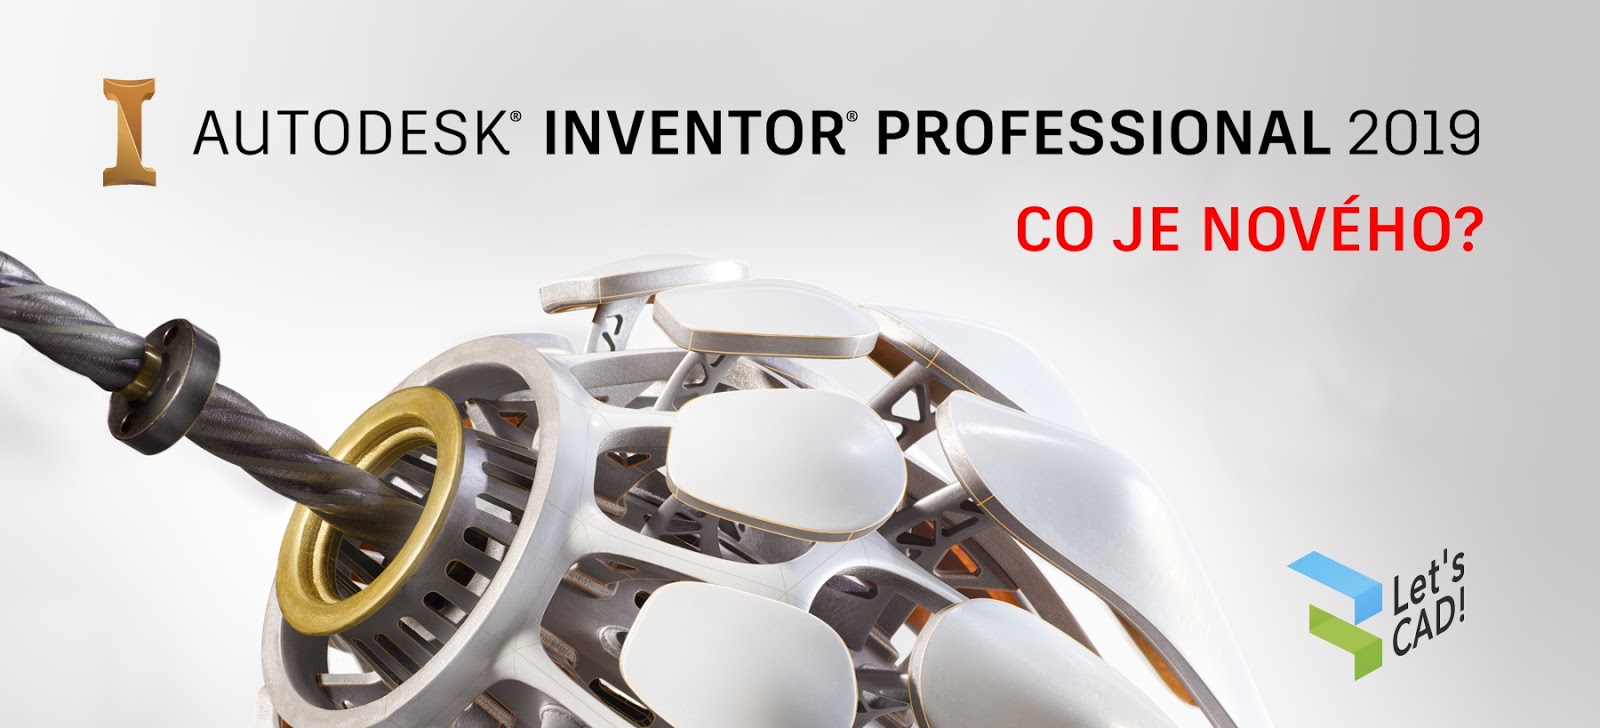 autodesk inventor 2019 professional